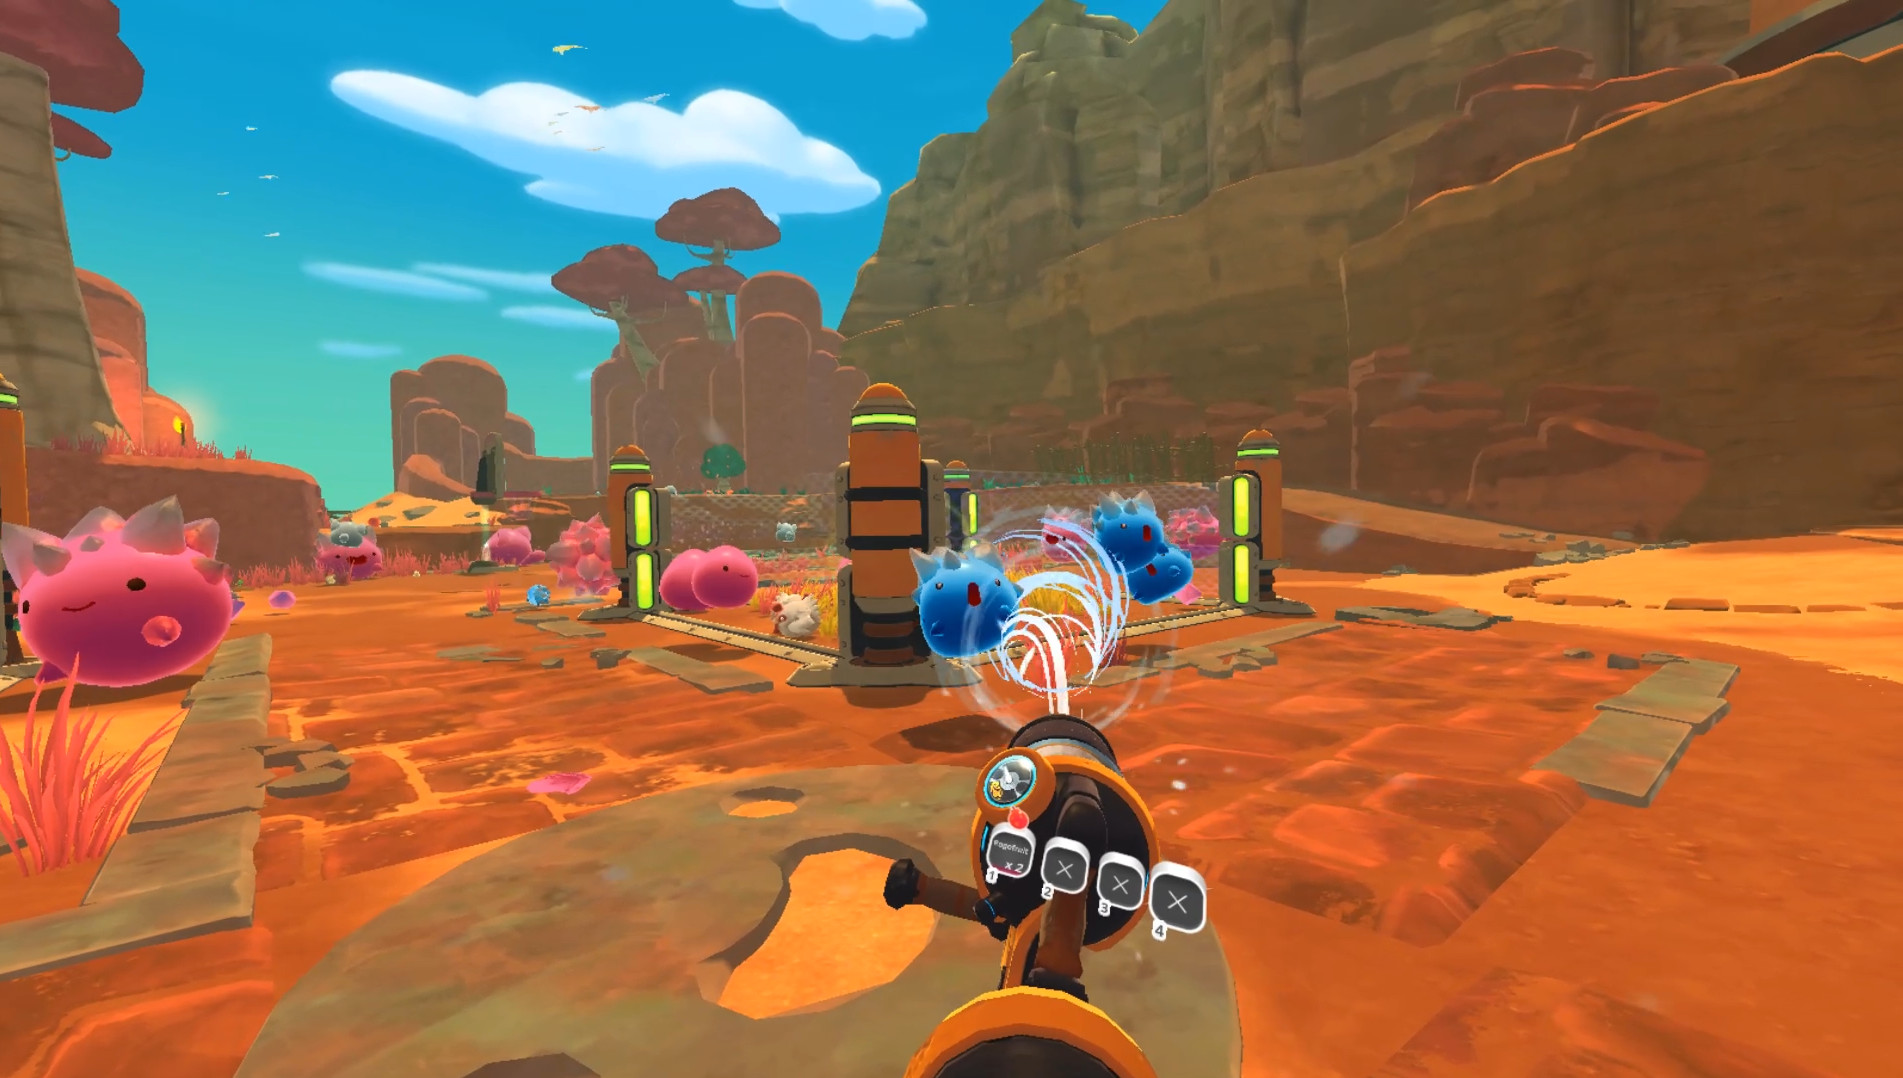 Slime Rancher: VR Playground no Steam